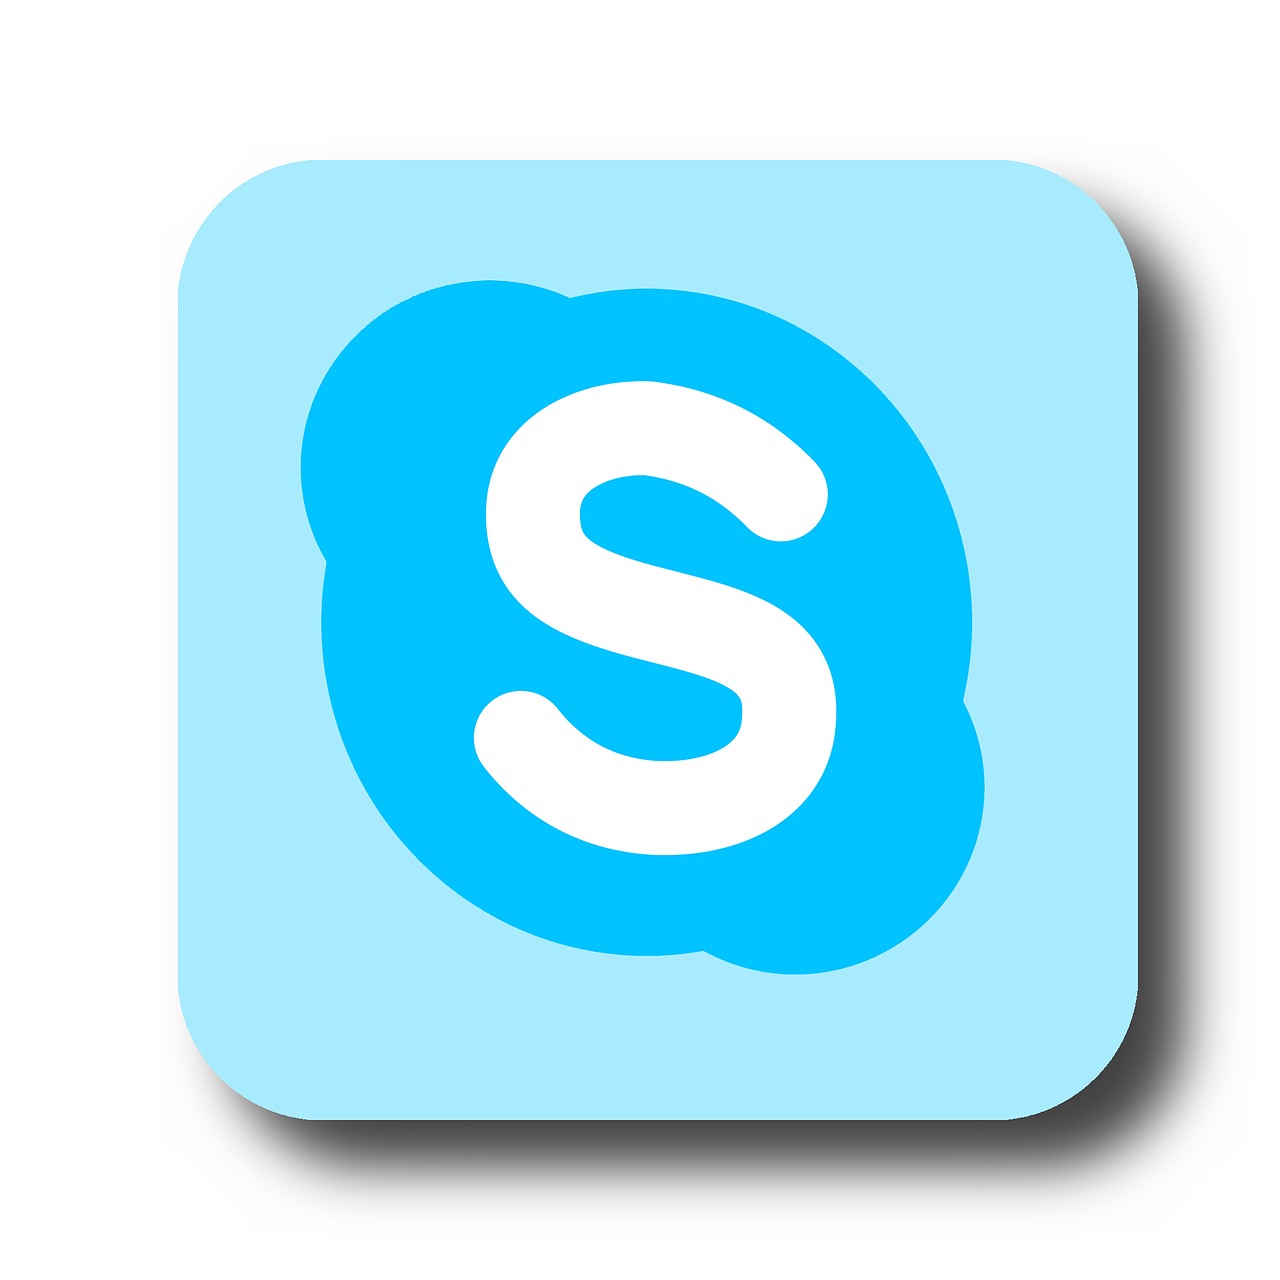 Skype,communication,technology,computer,internet - free image from needpix.com